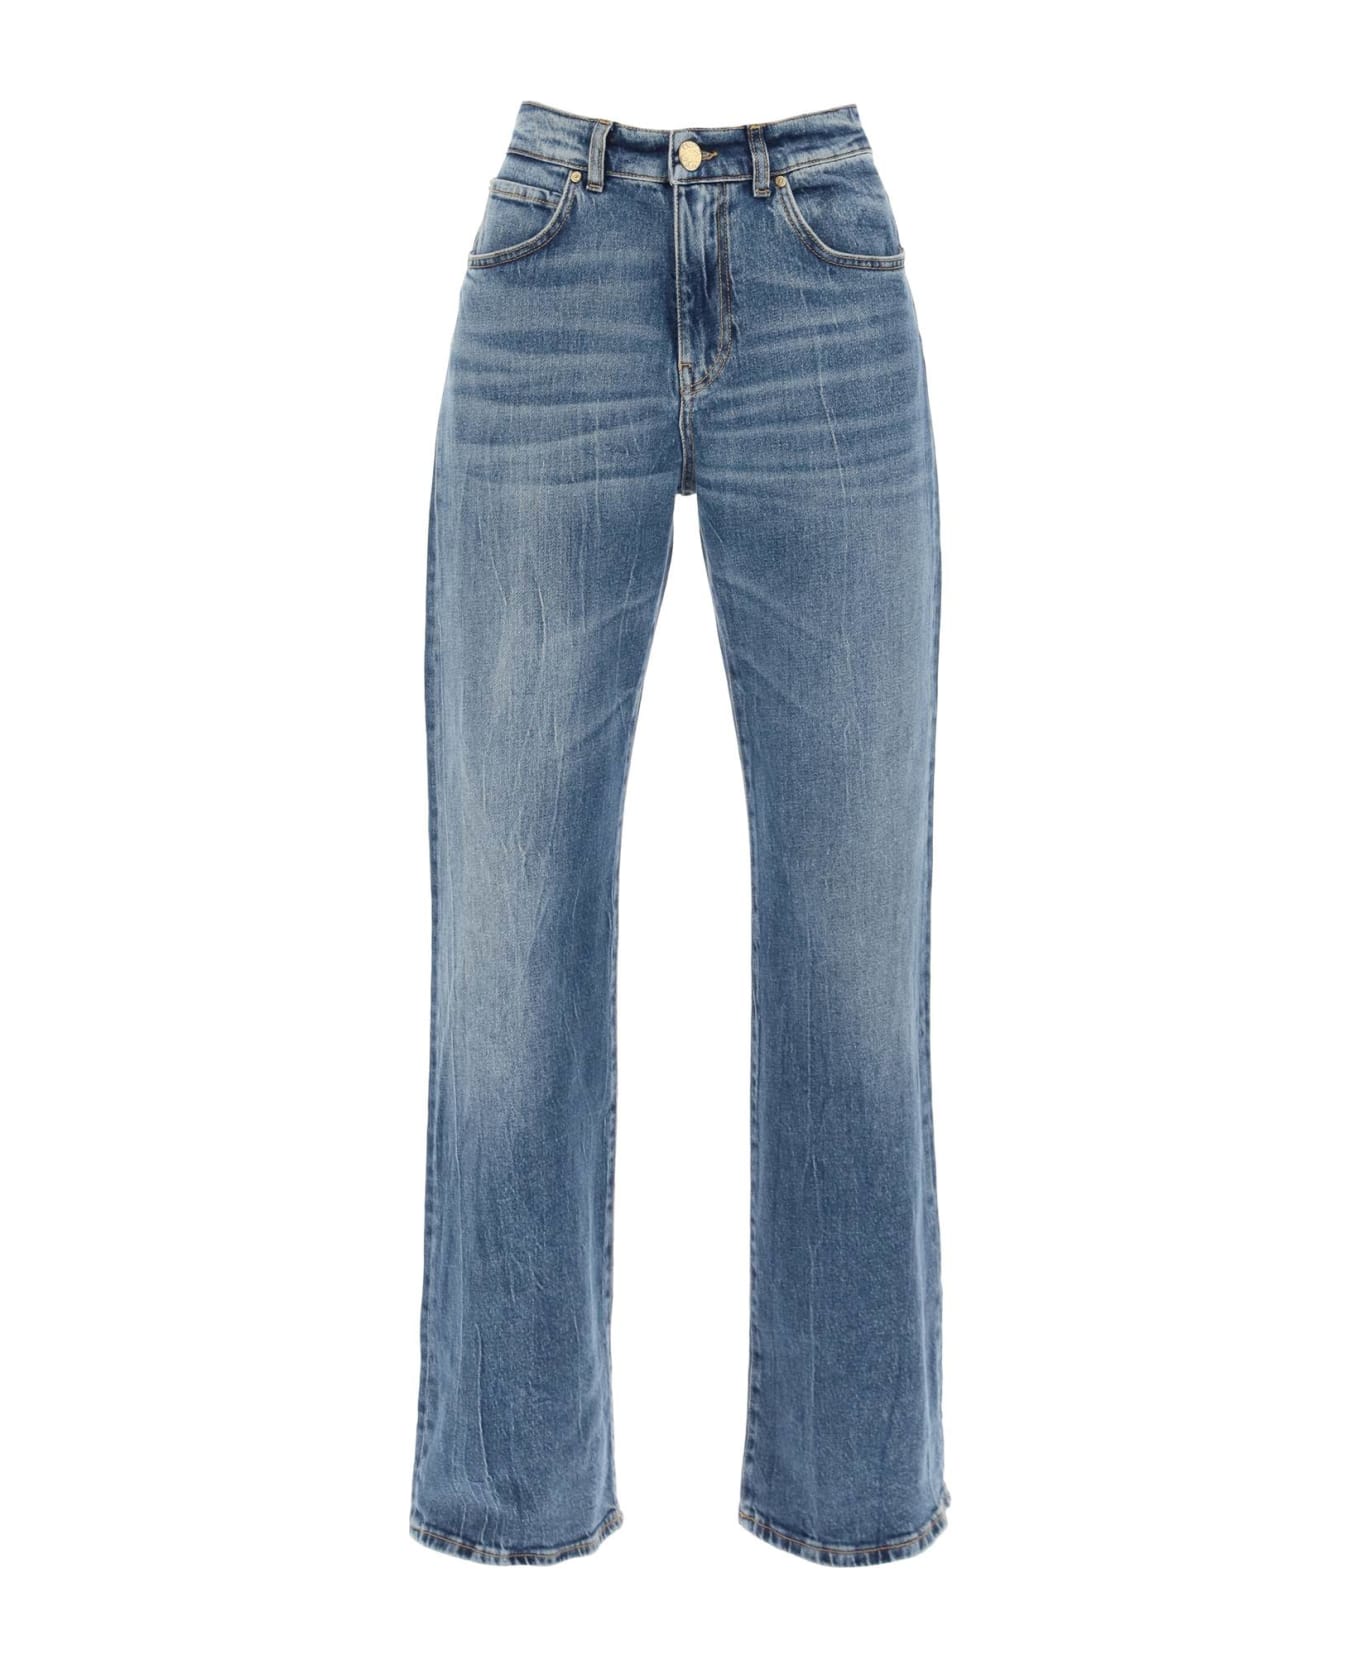 Pinko Wanda Loose Jeans - VINTAGE SCURO (Blue)